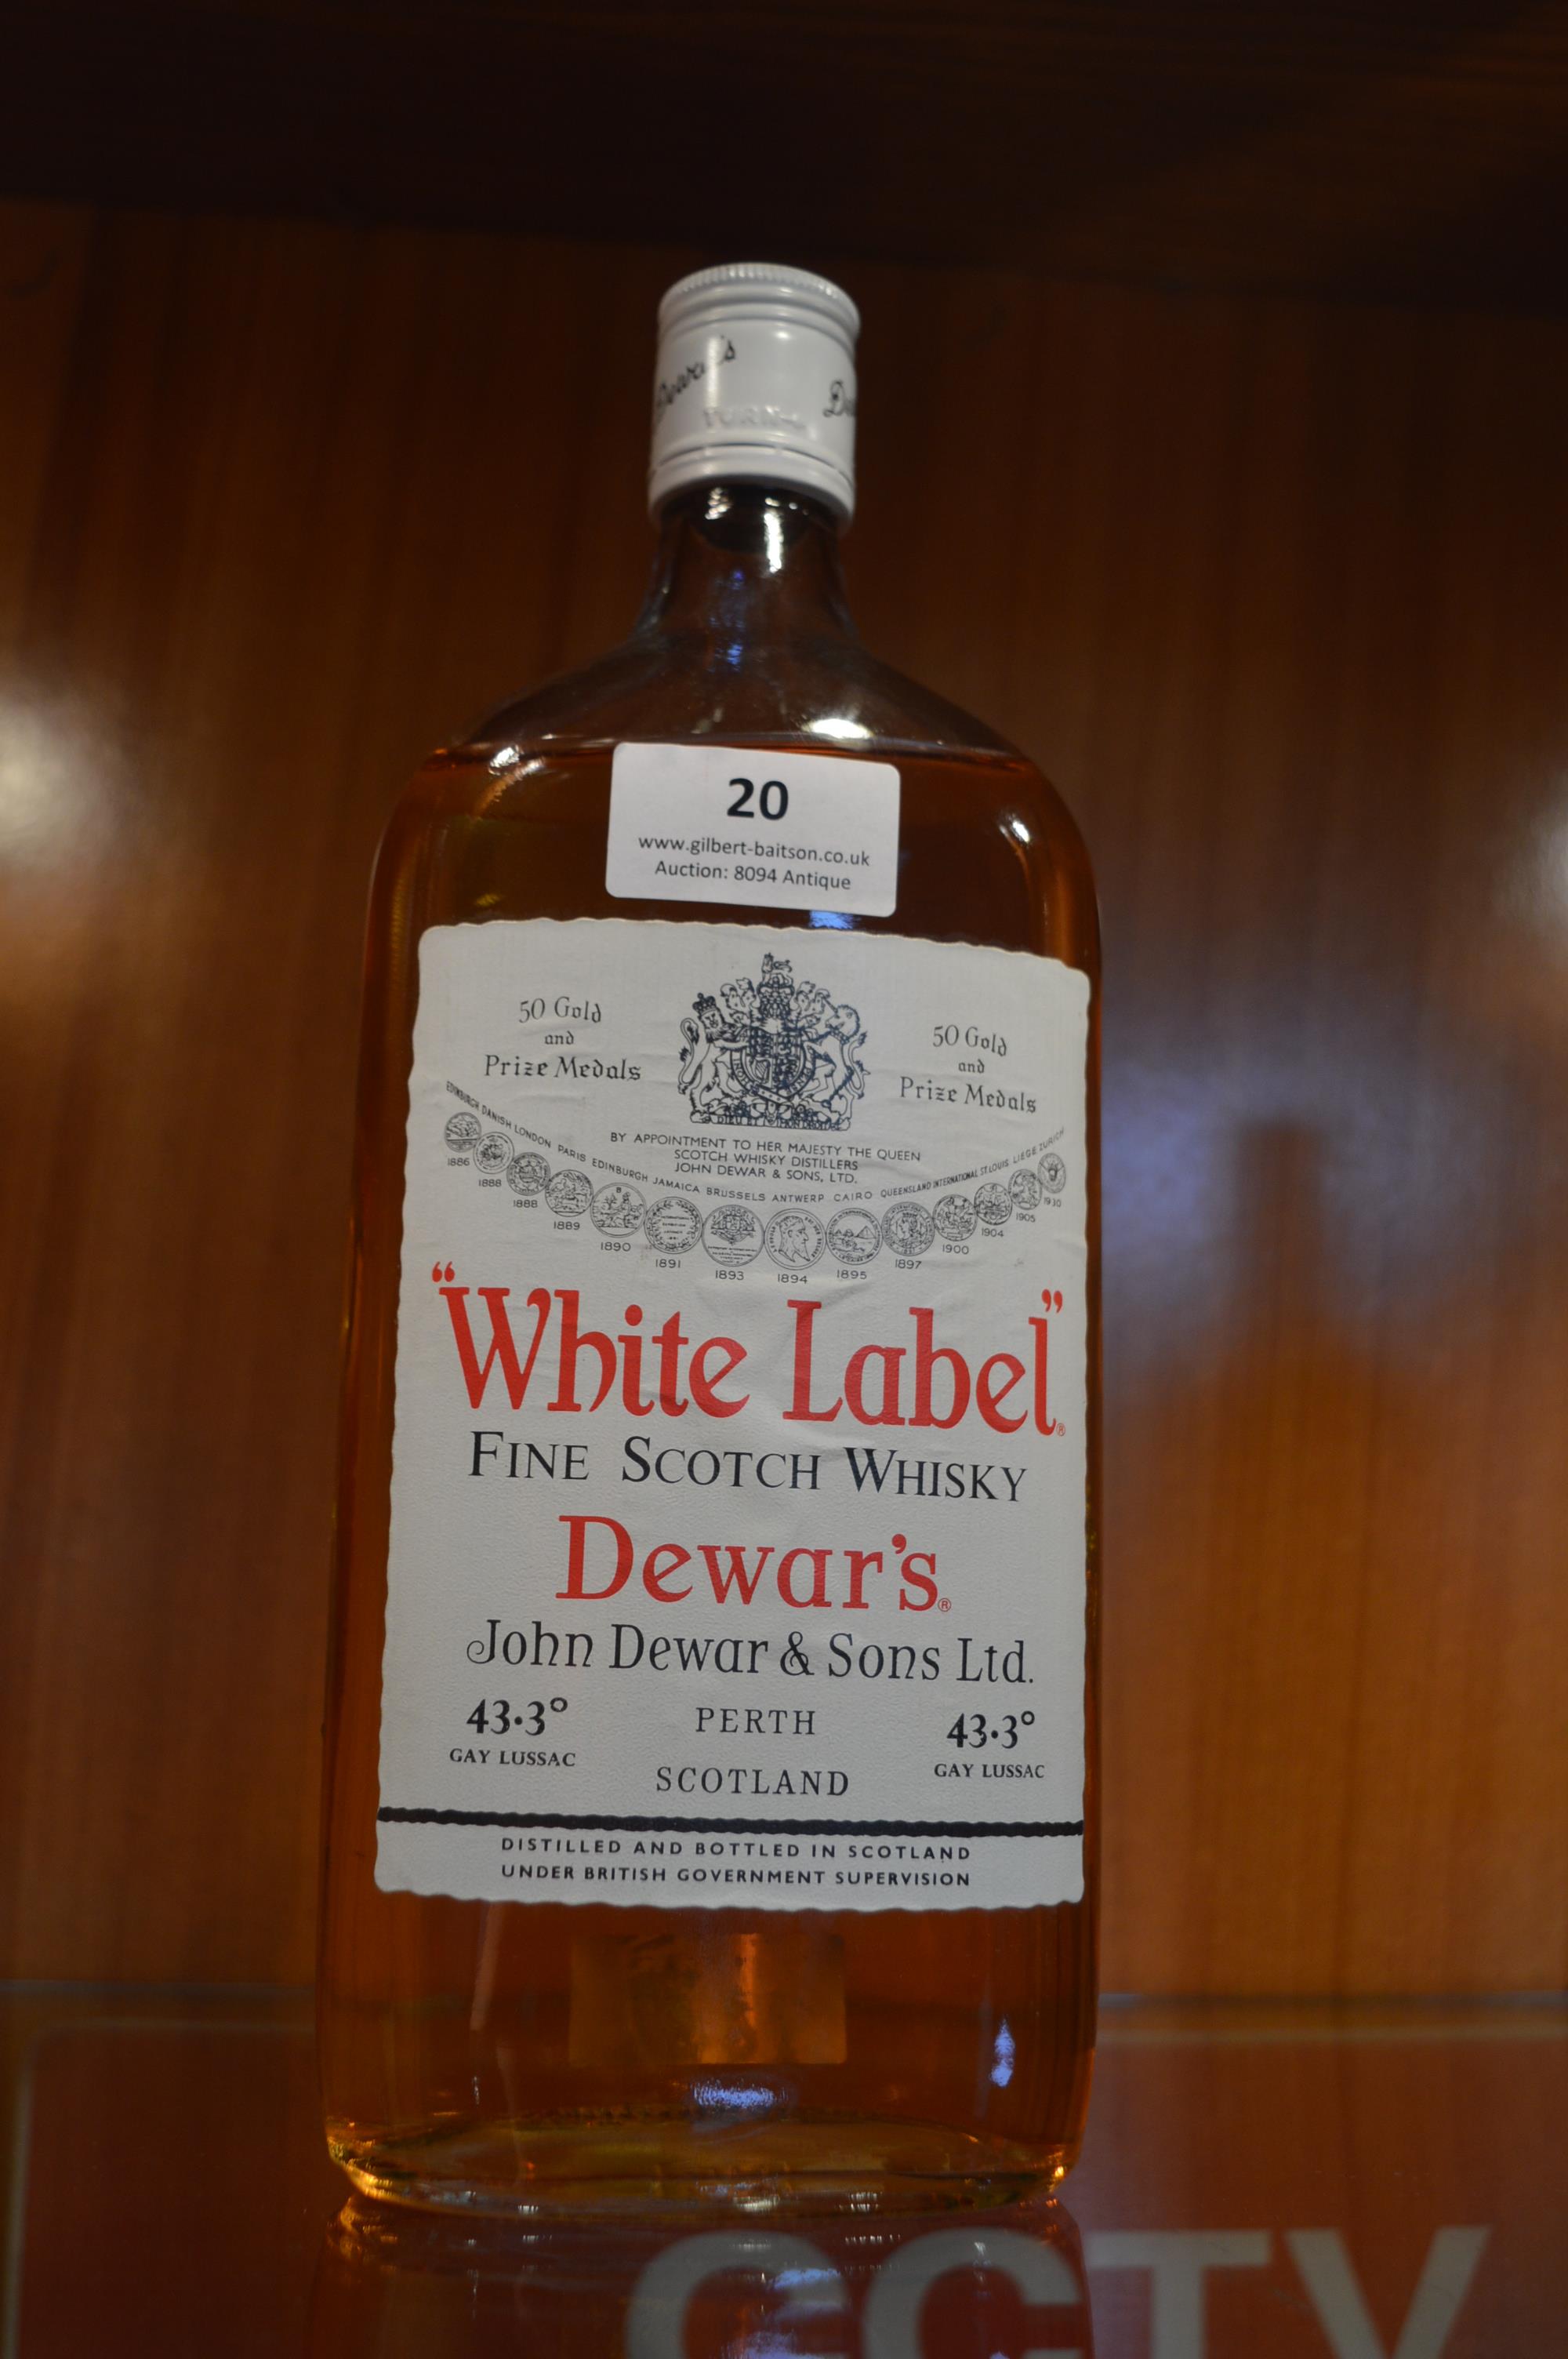 Bottle of Dewar's White Label Scotch Whisky